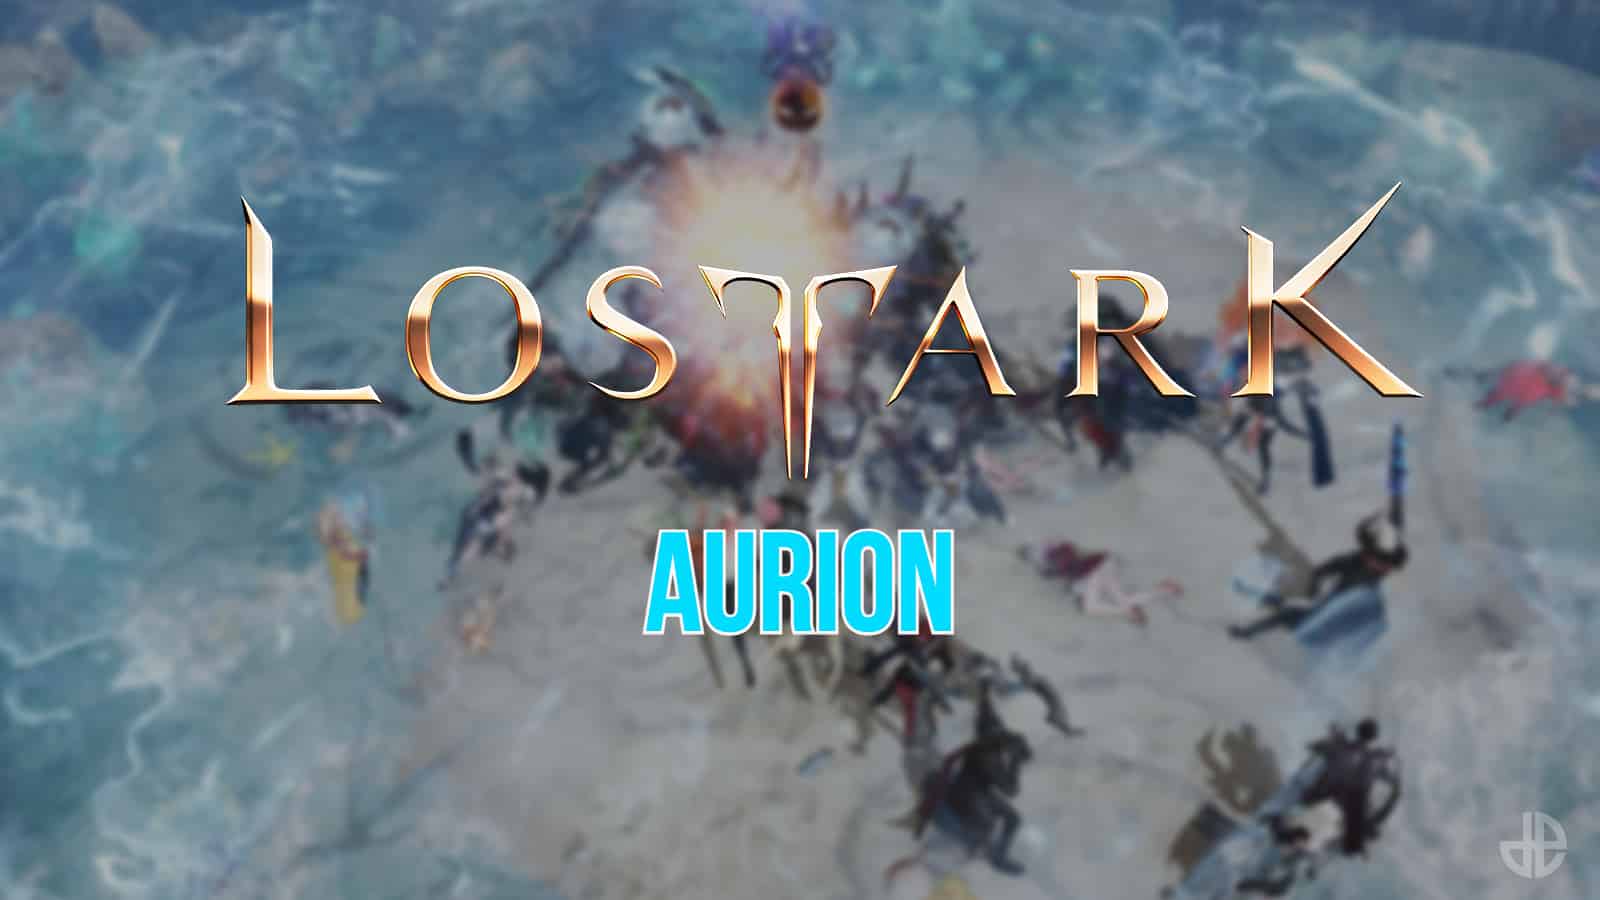 lost ark aurion guide image